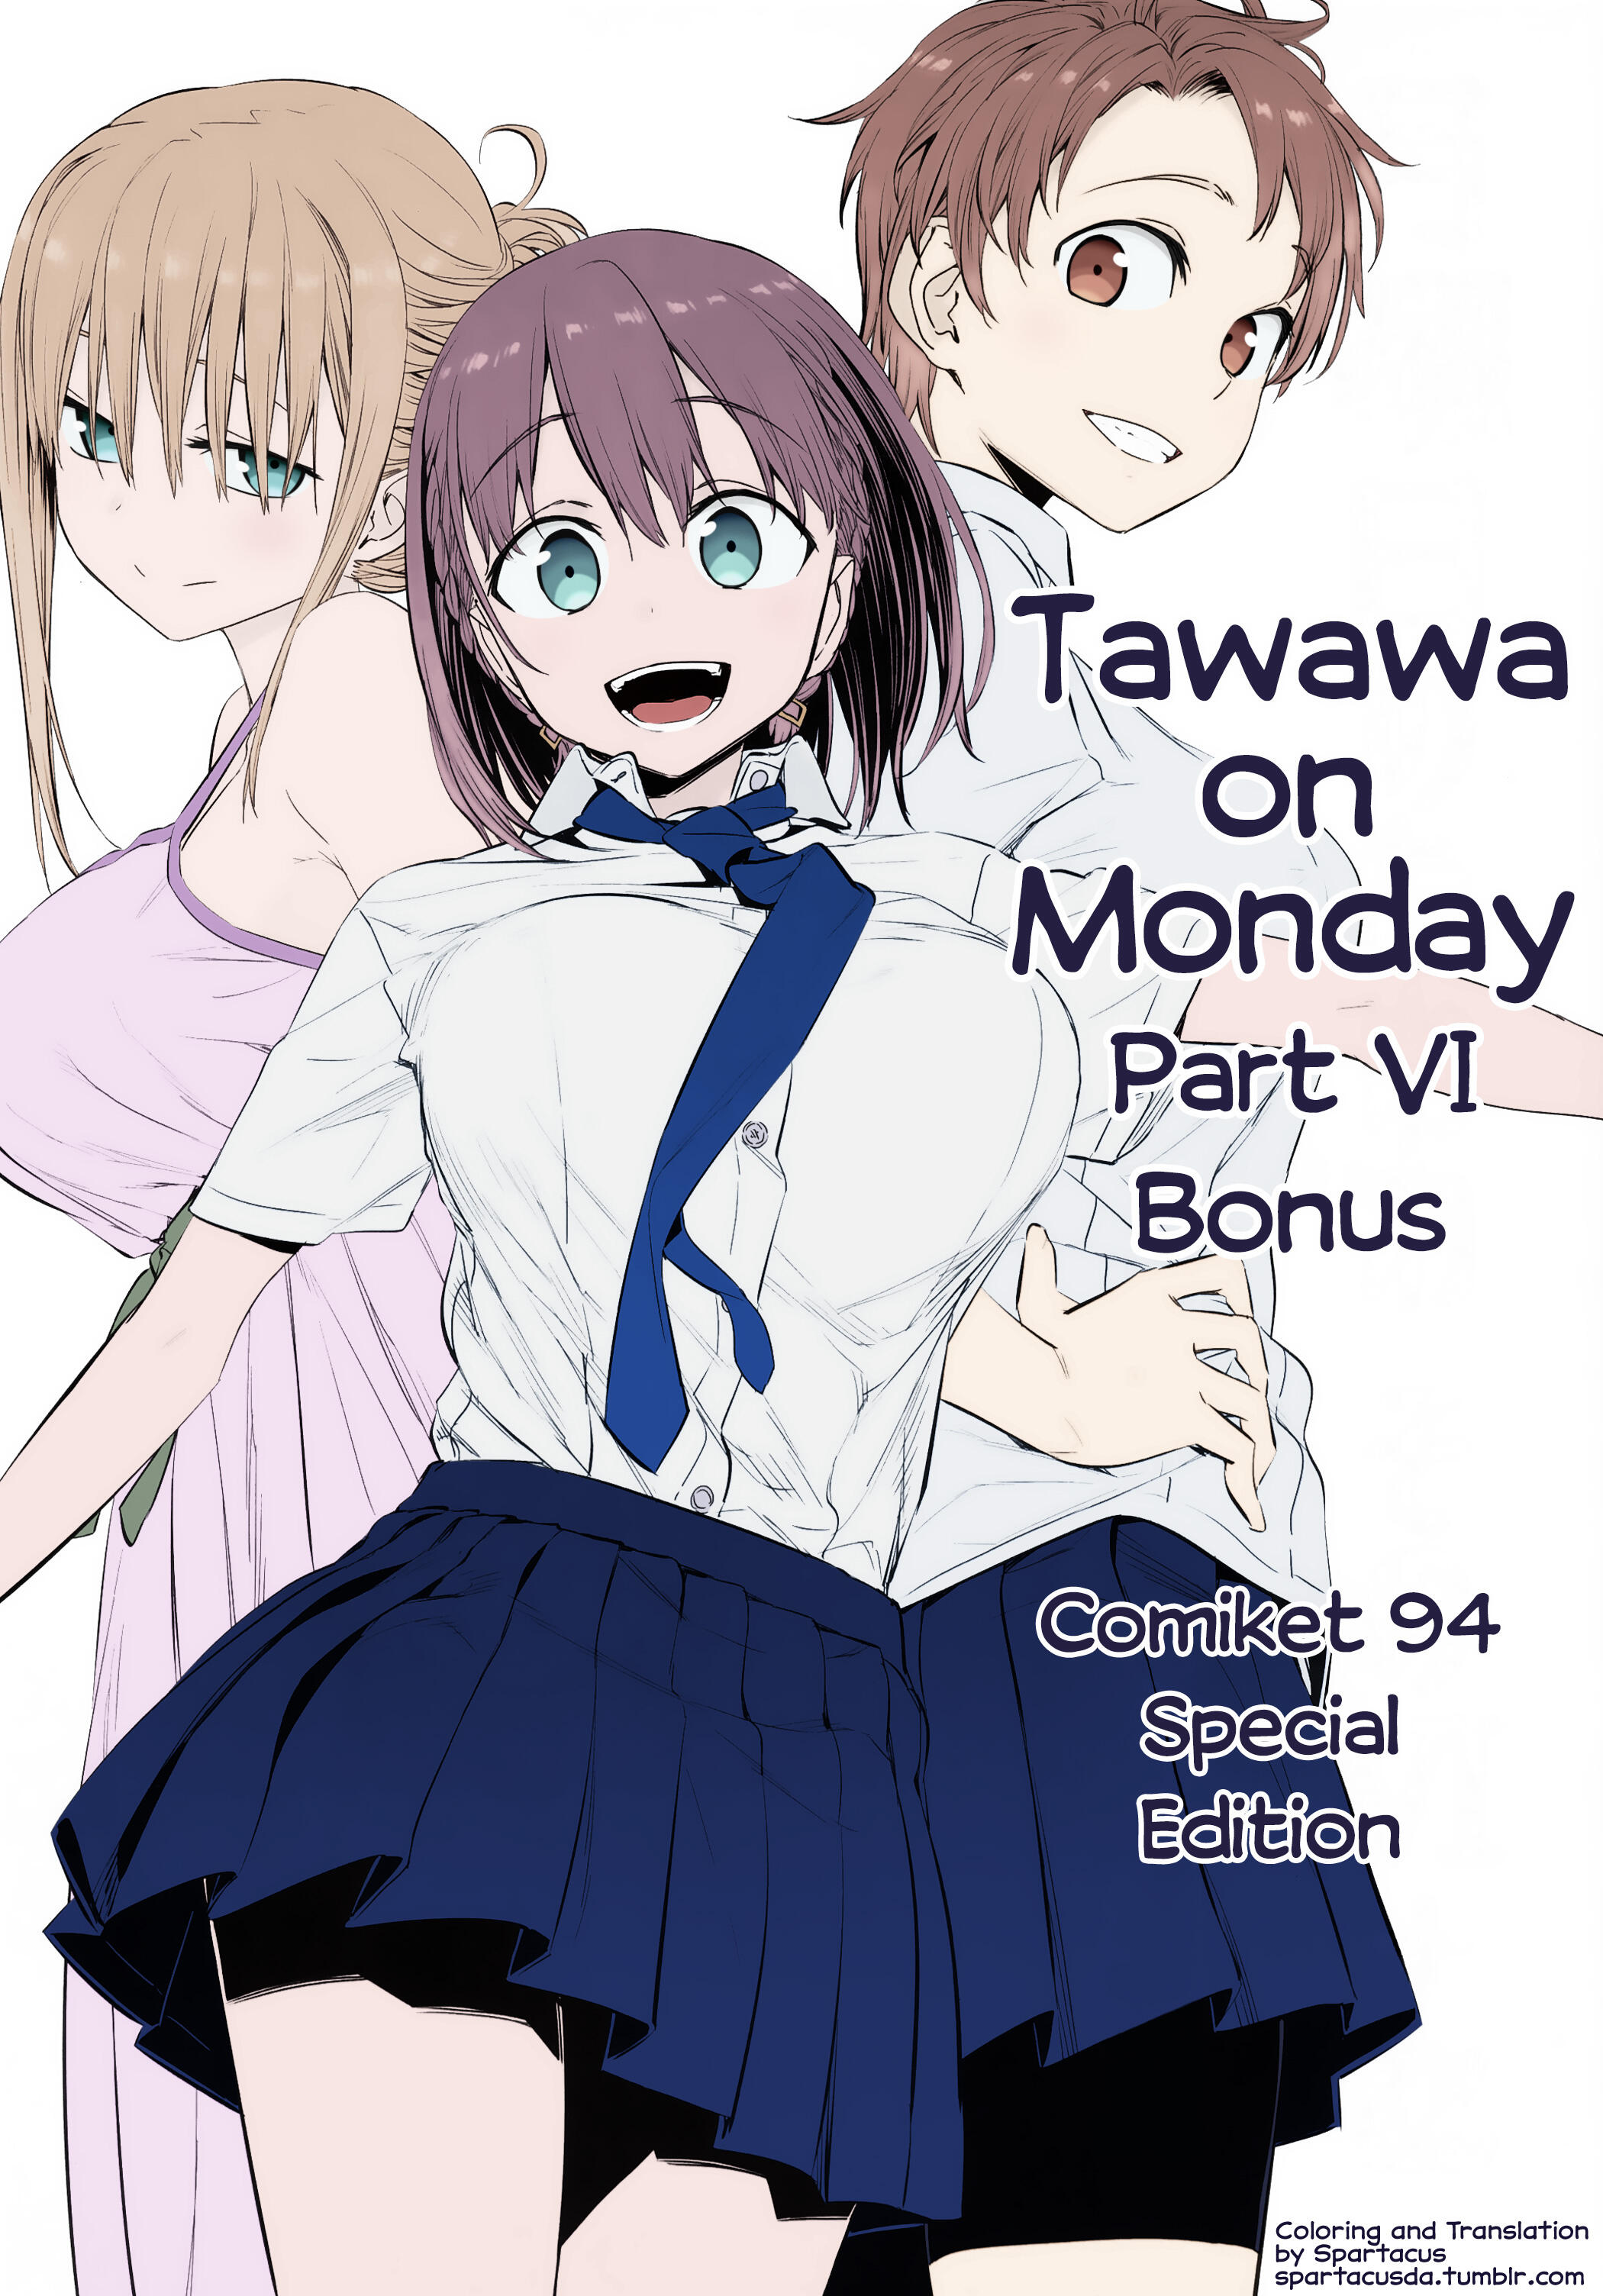 Read Getsuyoubi No Tawawa (Twitter Webcomic) (Fan Colored) Vol.2 Chapter 4:  Part Ii: Monday Morning Offerings (46-77) on Mangakakalot